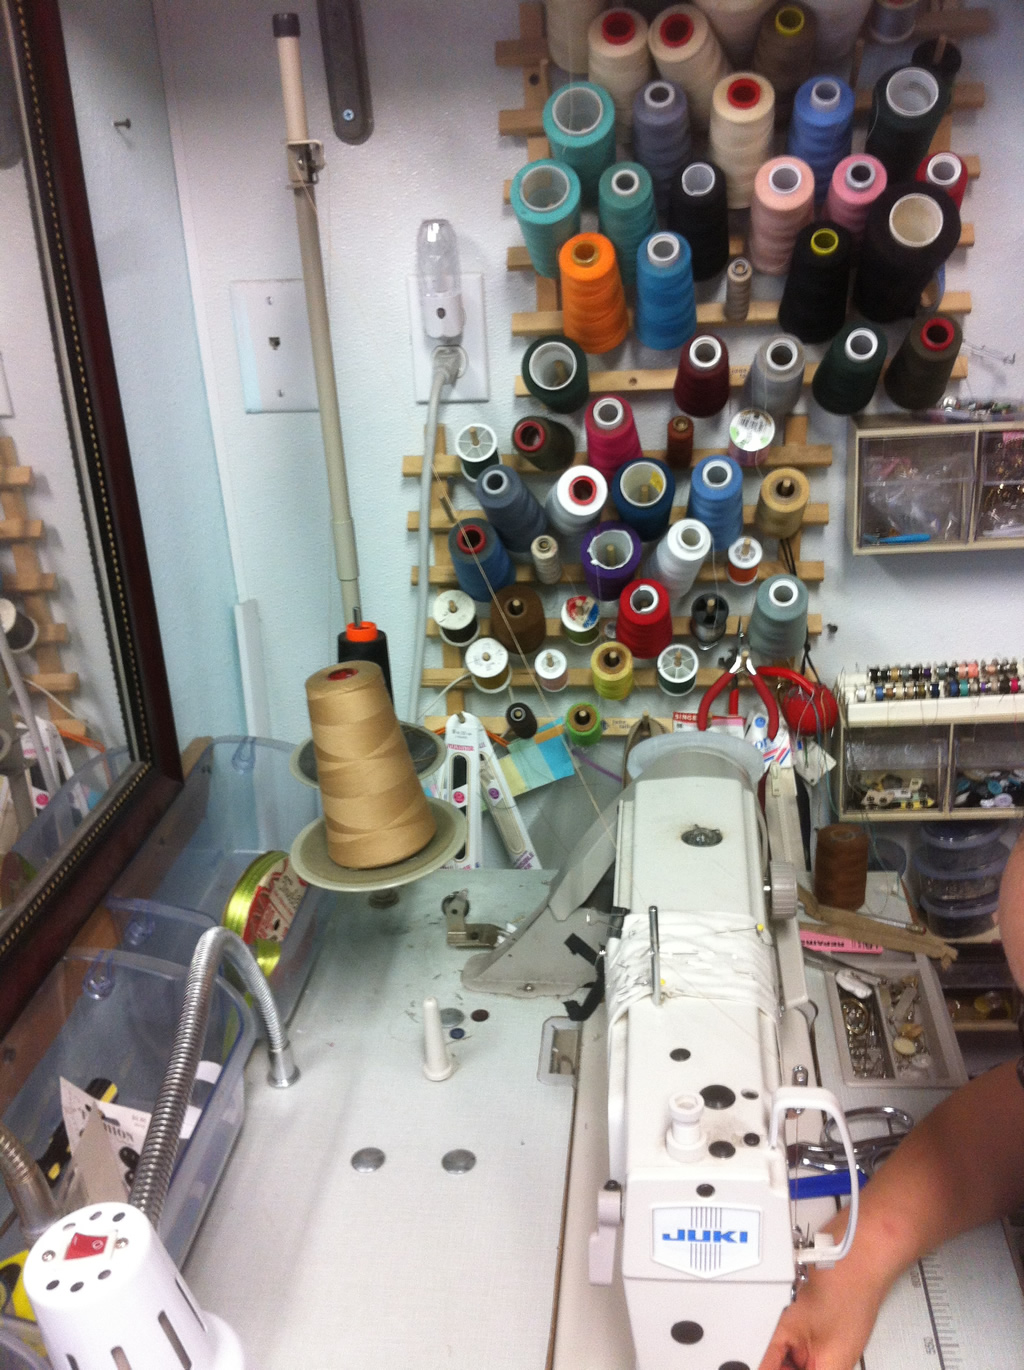 Threads, Bobbins, and Juki Sewing Machine